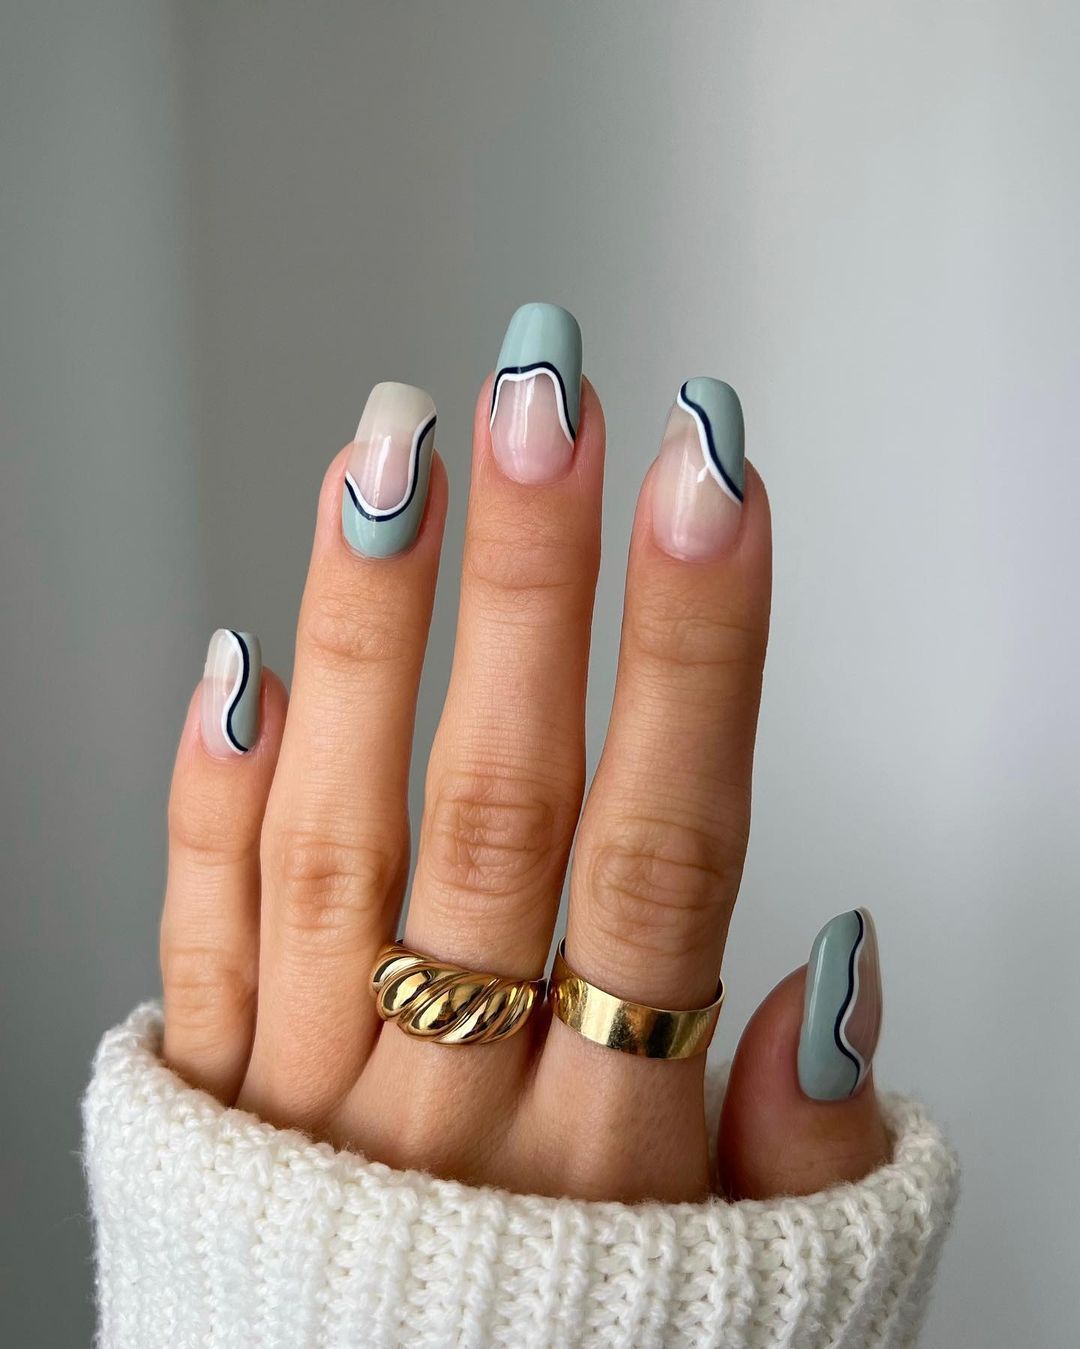 Nailside: Black & blue stripes